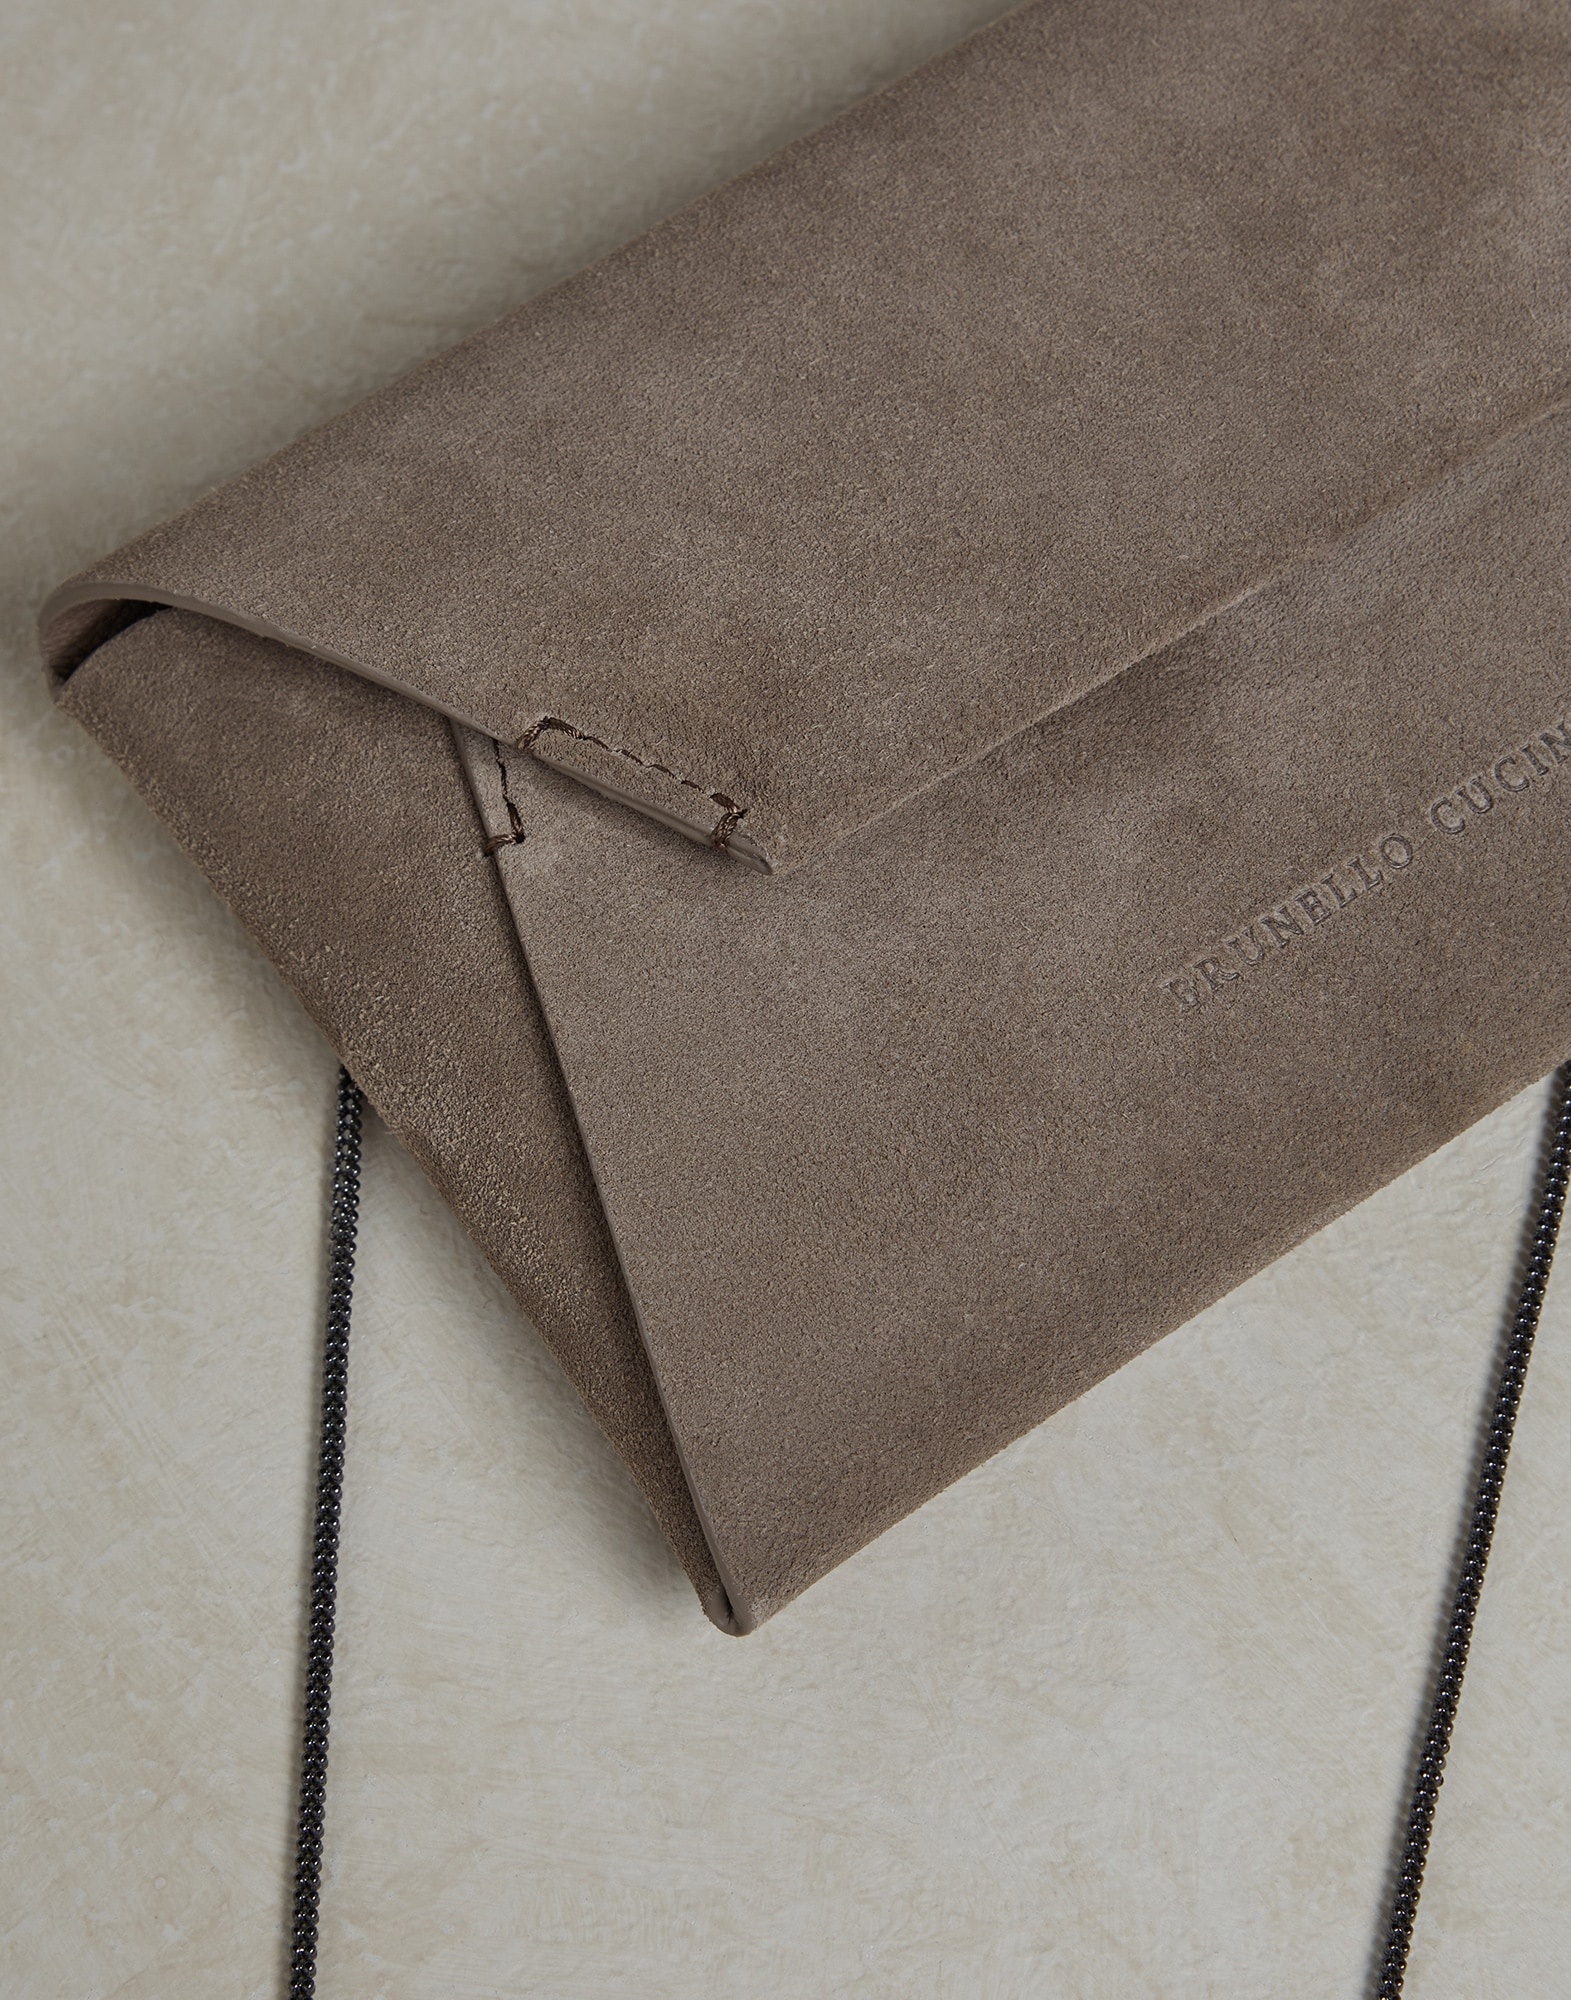 Suede envelope bag with precious chain - 3